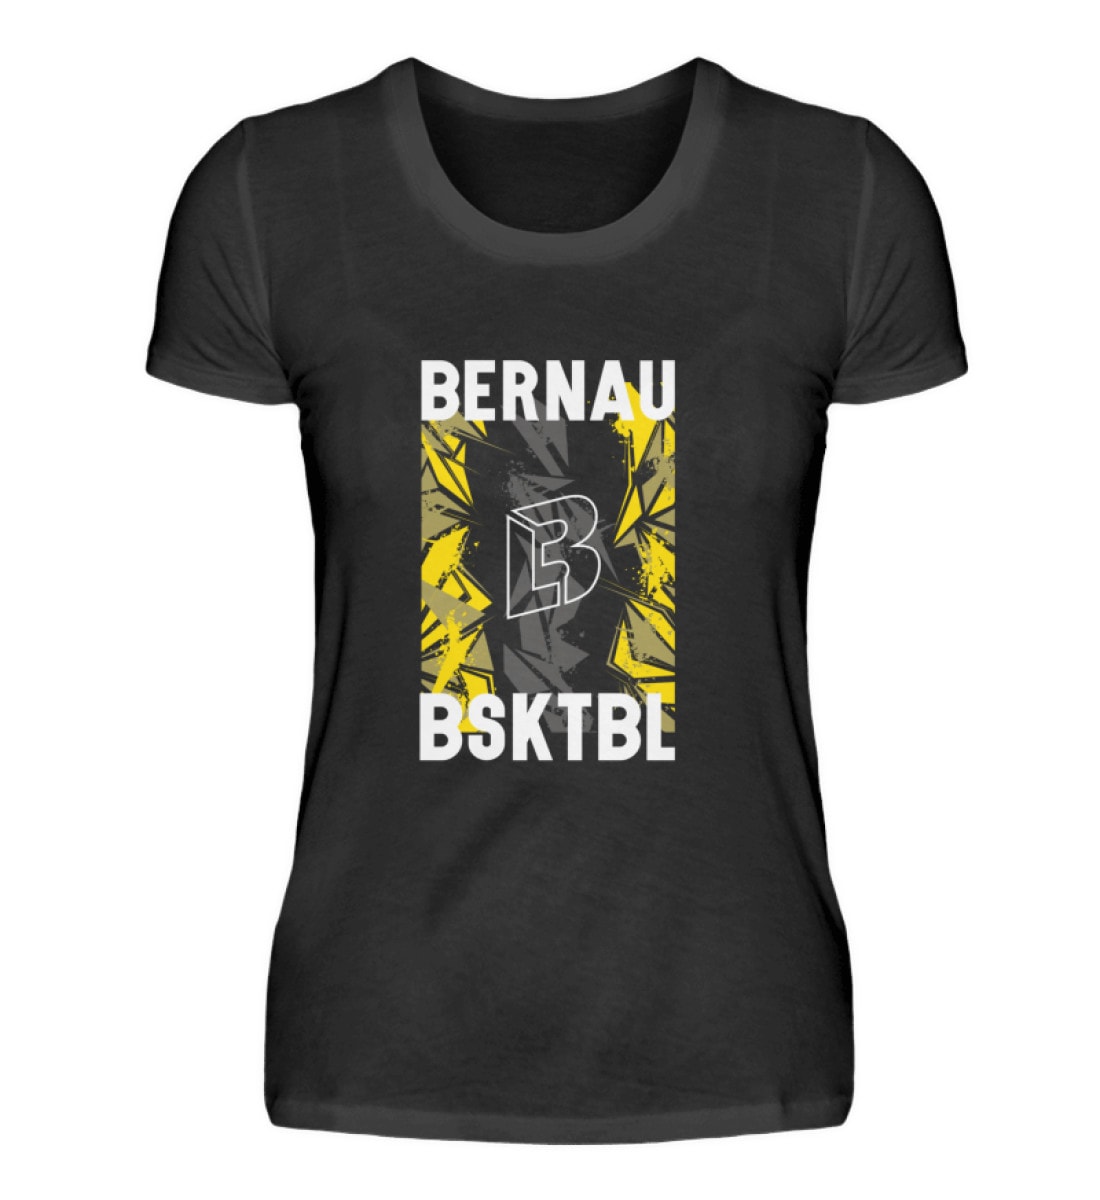 Bernau Bsktbl - Damen Premiumshirt-16